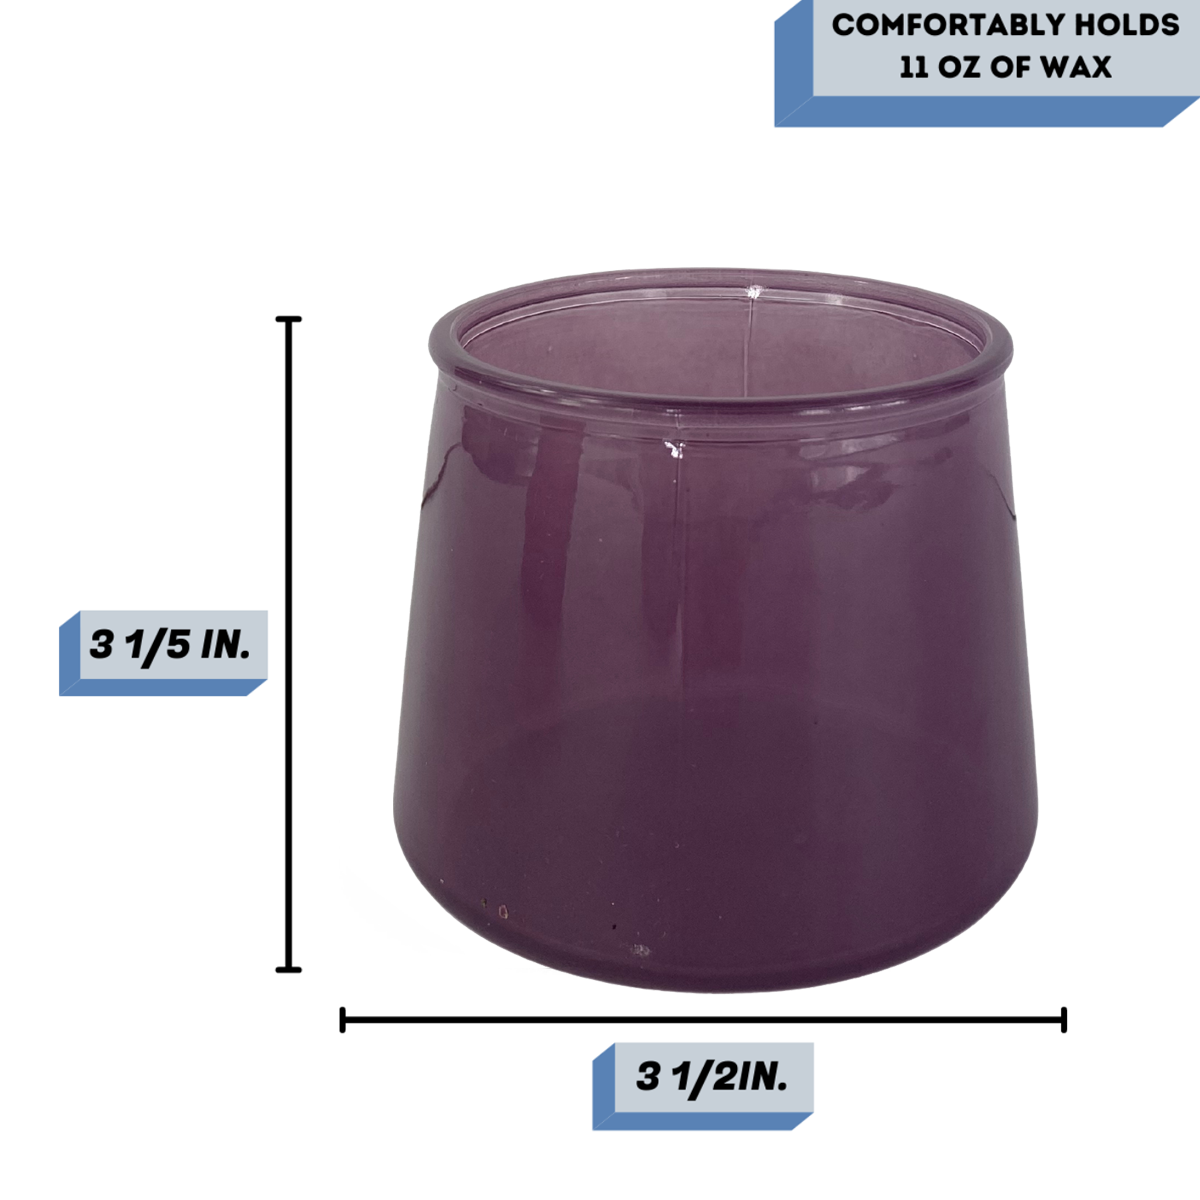 Kenzie lavender candle jar measurements